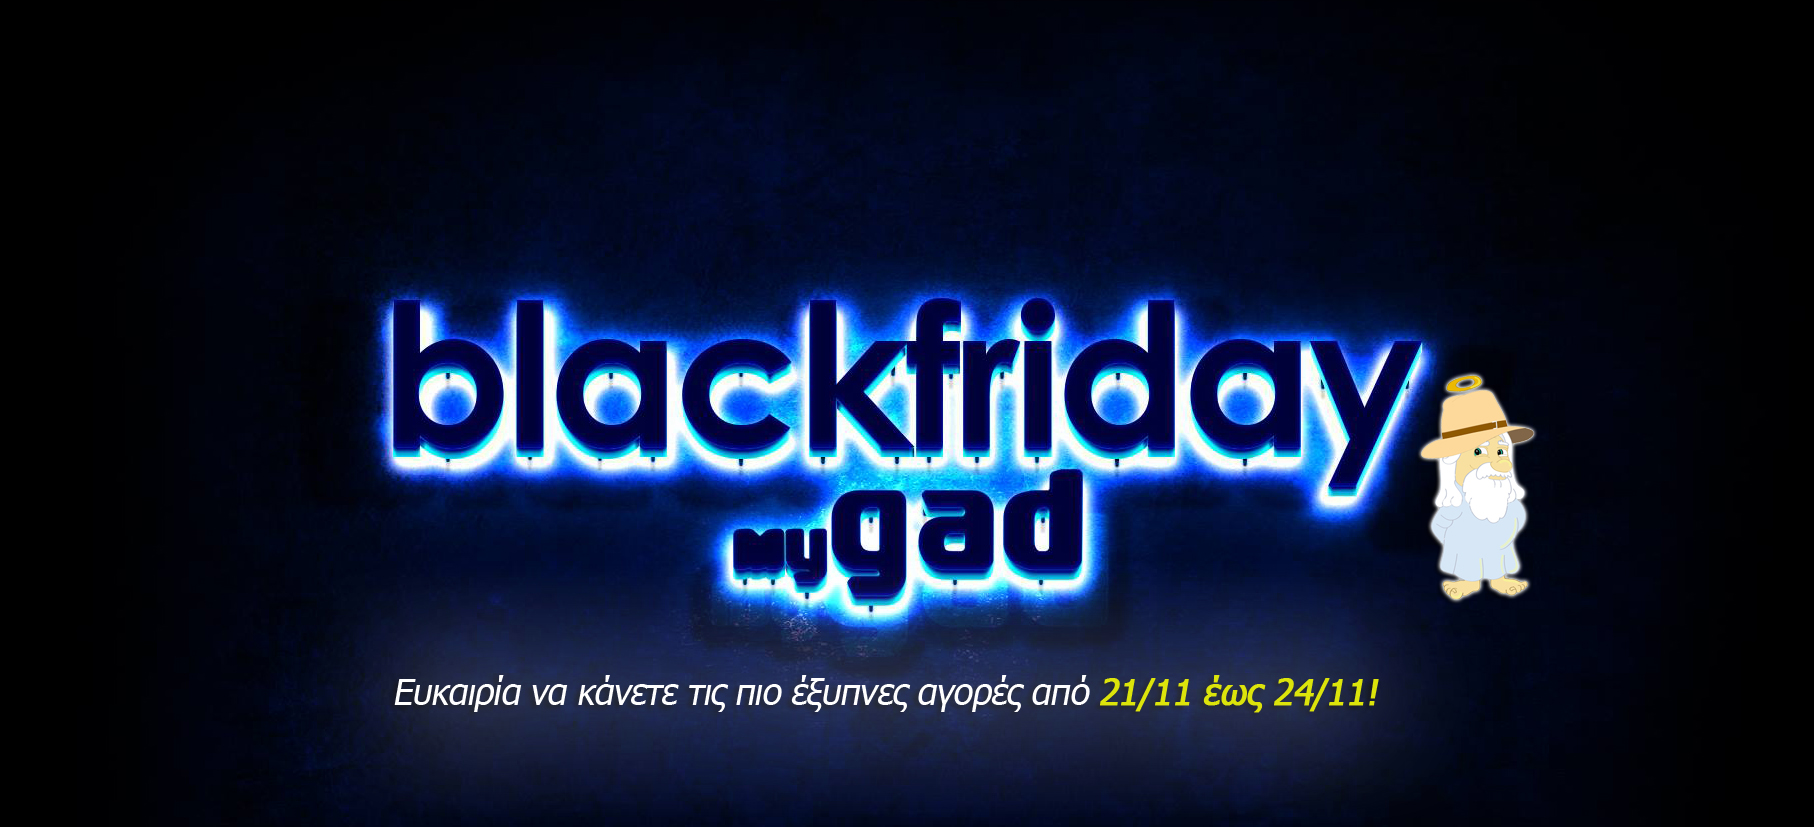 [MyGad.gr]: Ξεκίνησε το #blackisback με #BlackFriday super offers και θα κρατήσει έως τις 24/11! 1